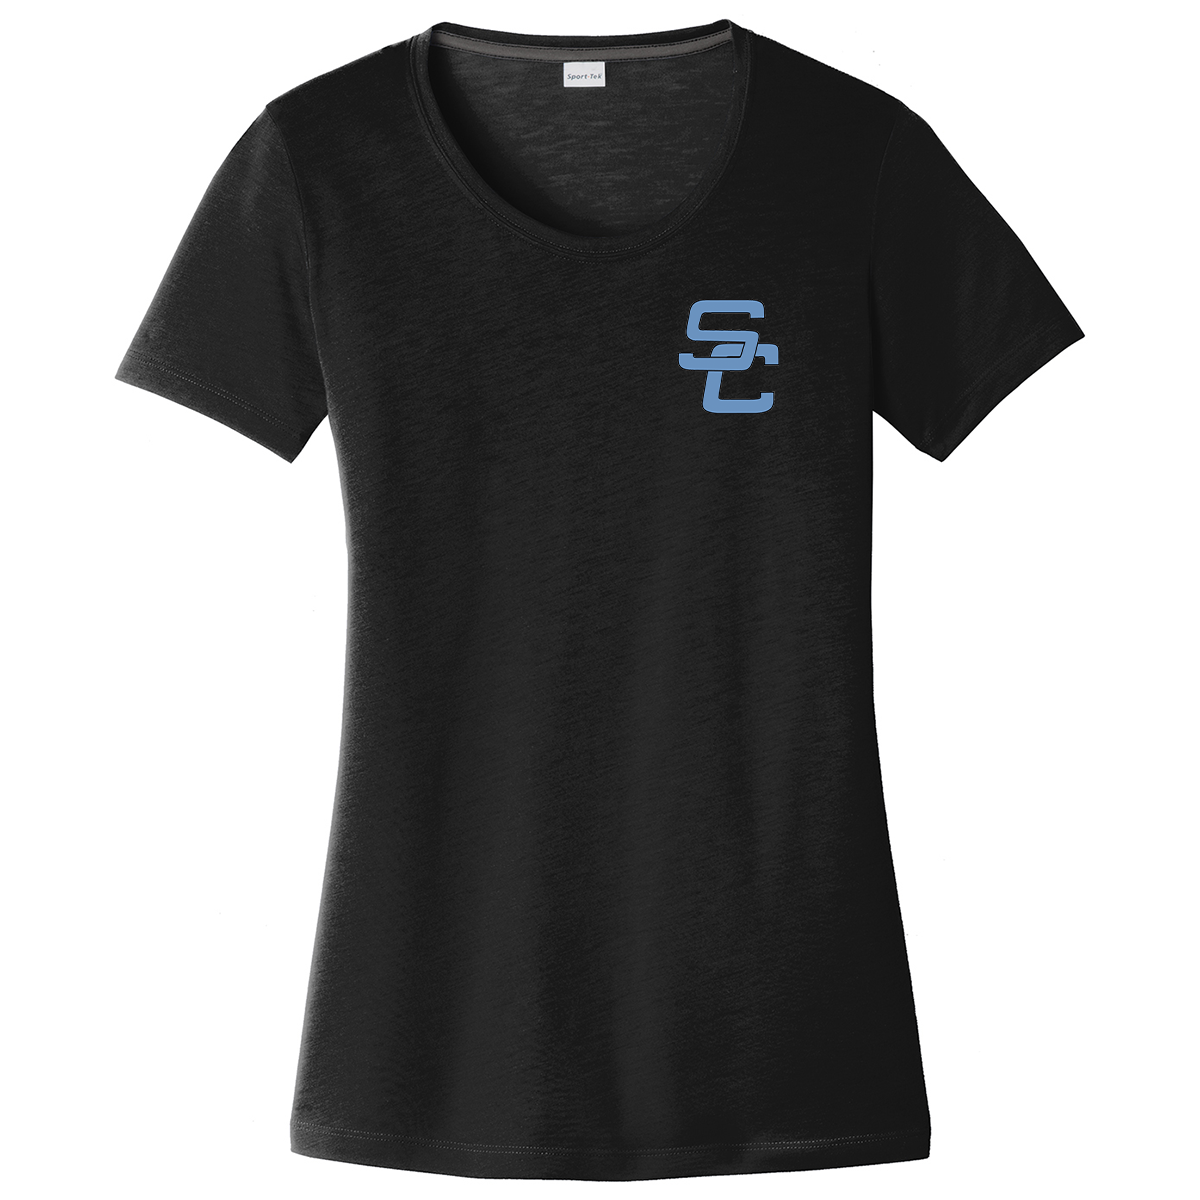 South Carolina Yankees Women's CottonTouch Performance T-Shirt